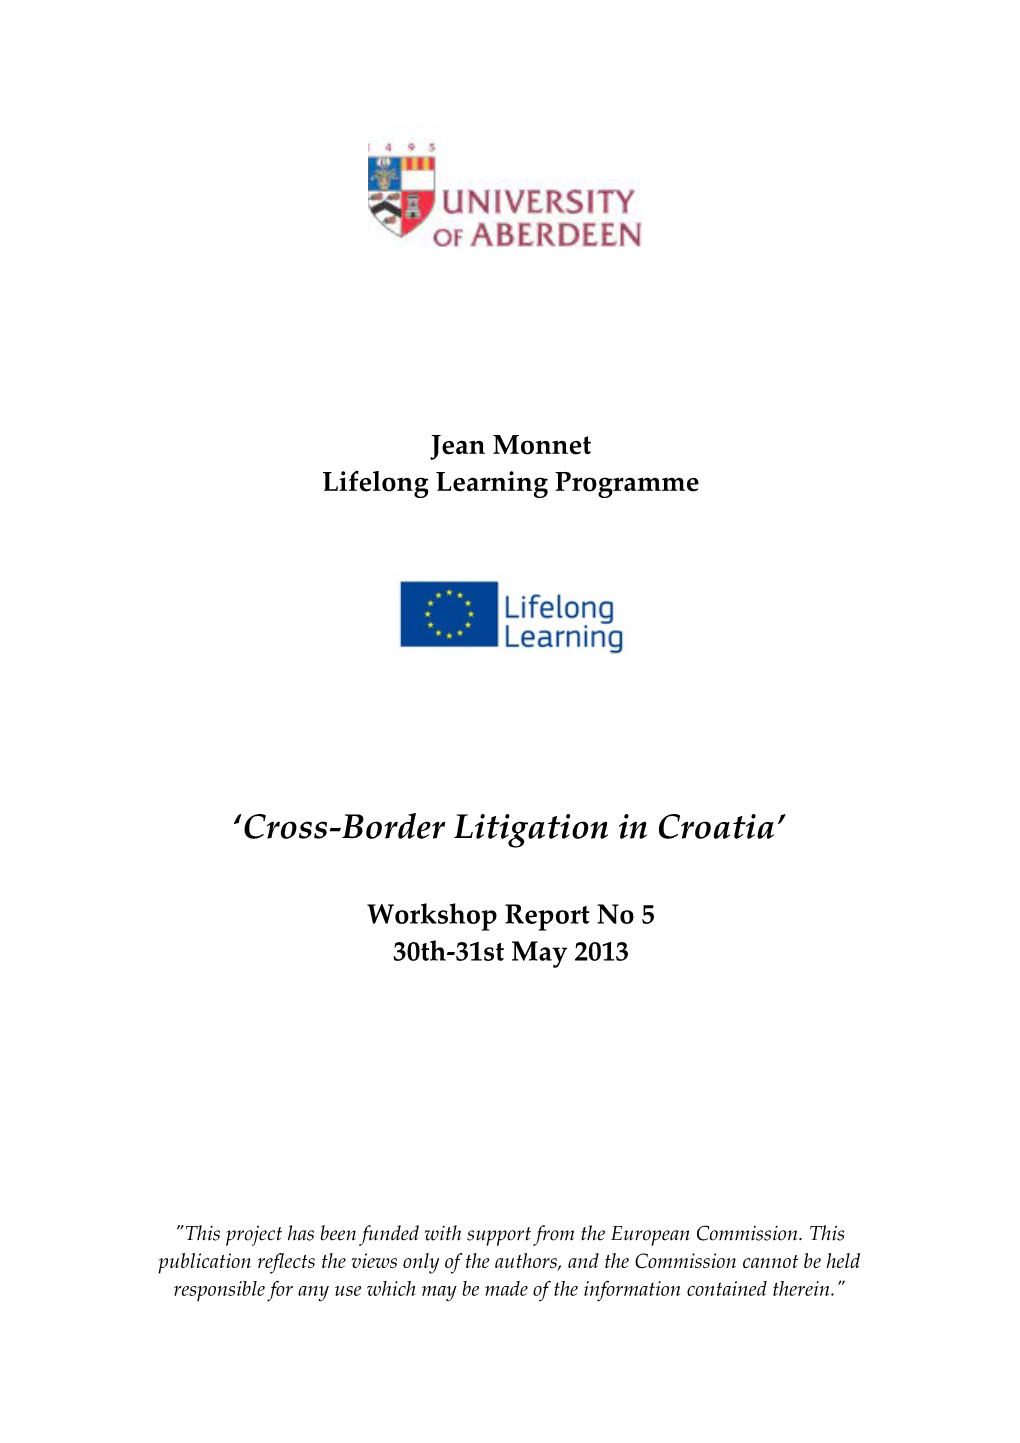 Cross-Border Litigation in Croatia